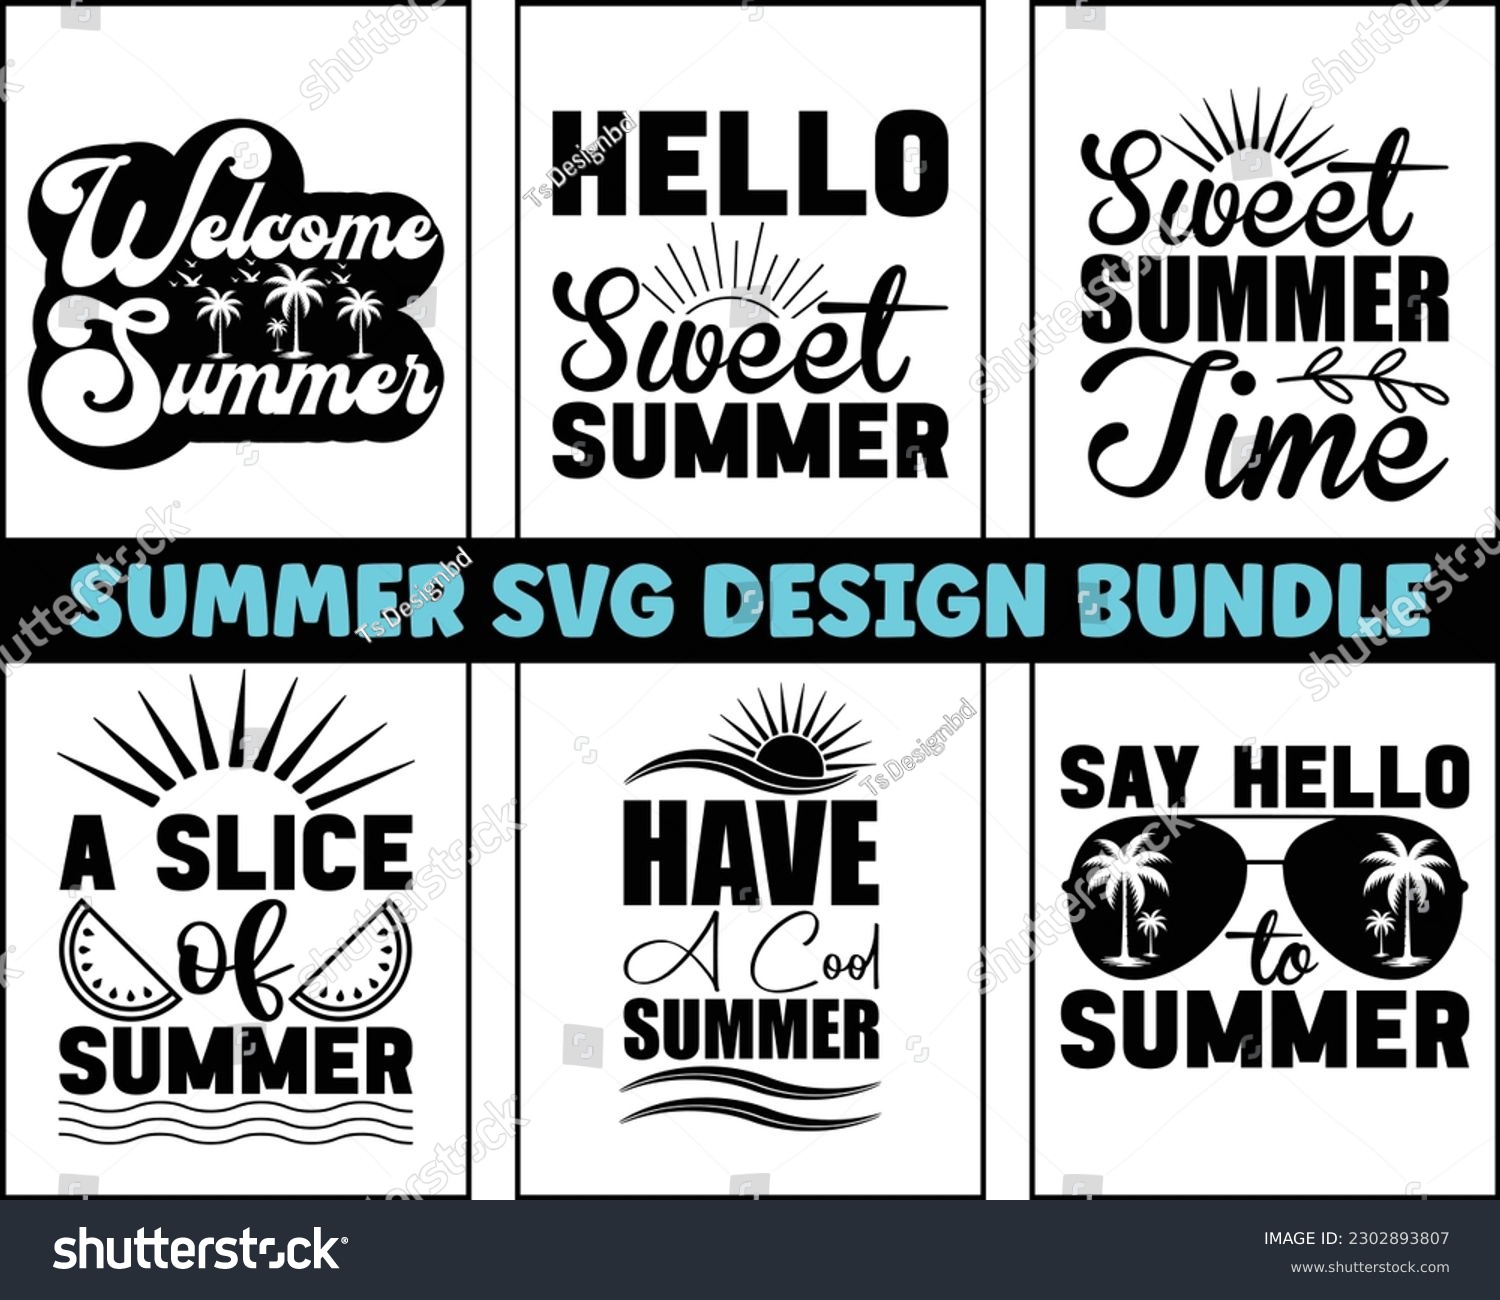 SVG of summer SVG design bundle,Summer Beach Bundle SVG,Summer Quotes SVG Designs Bundle,Summer Design for Shirts,Hello Summer quotes t shirt designs bundle,  svg